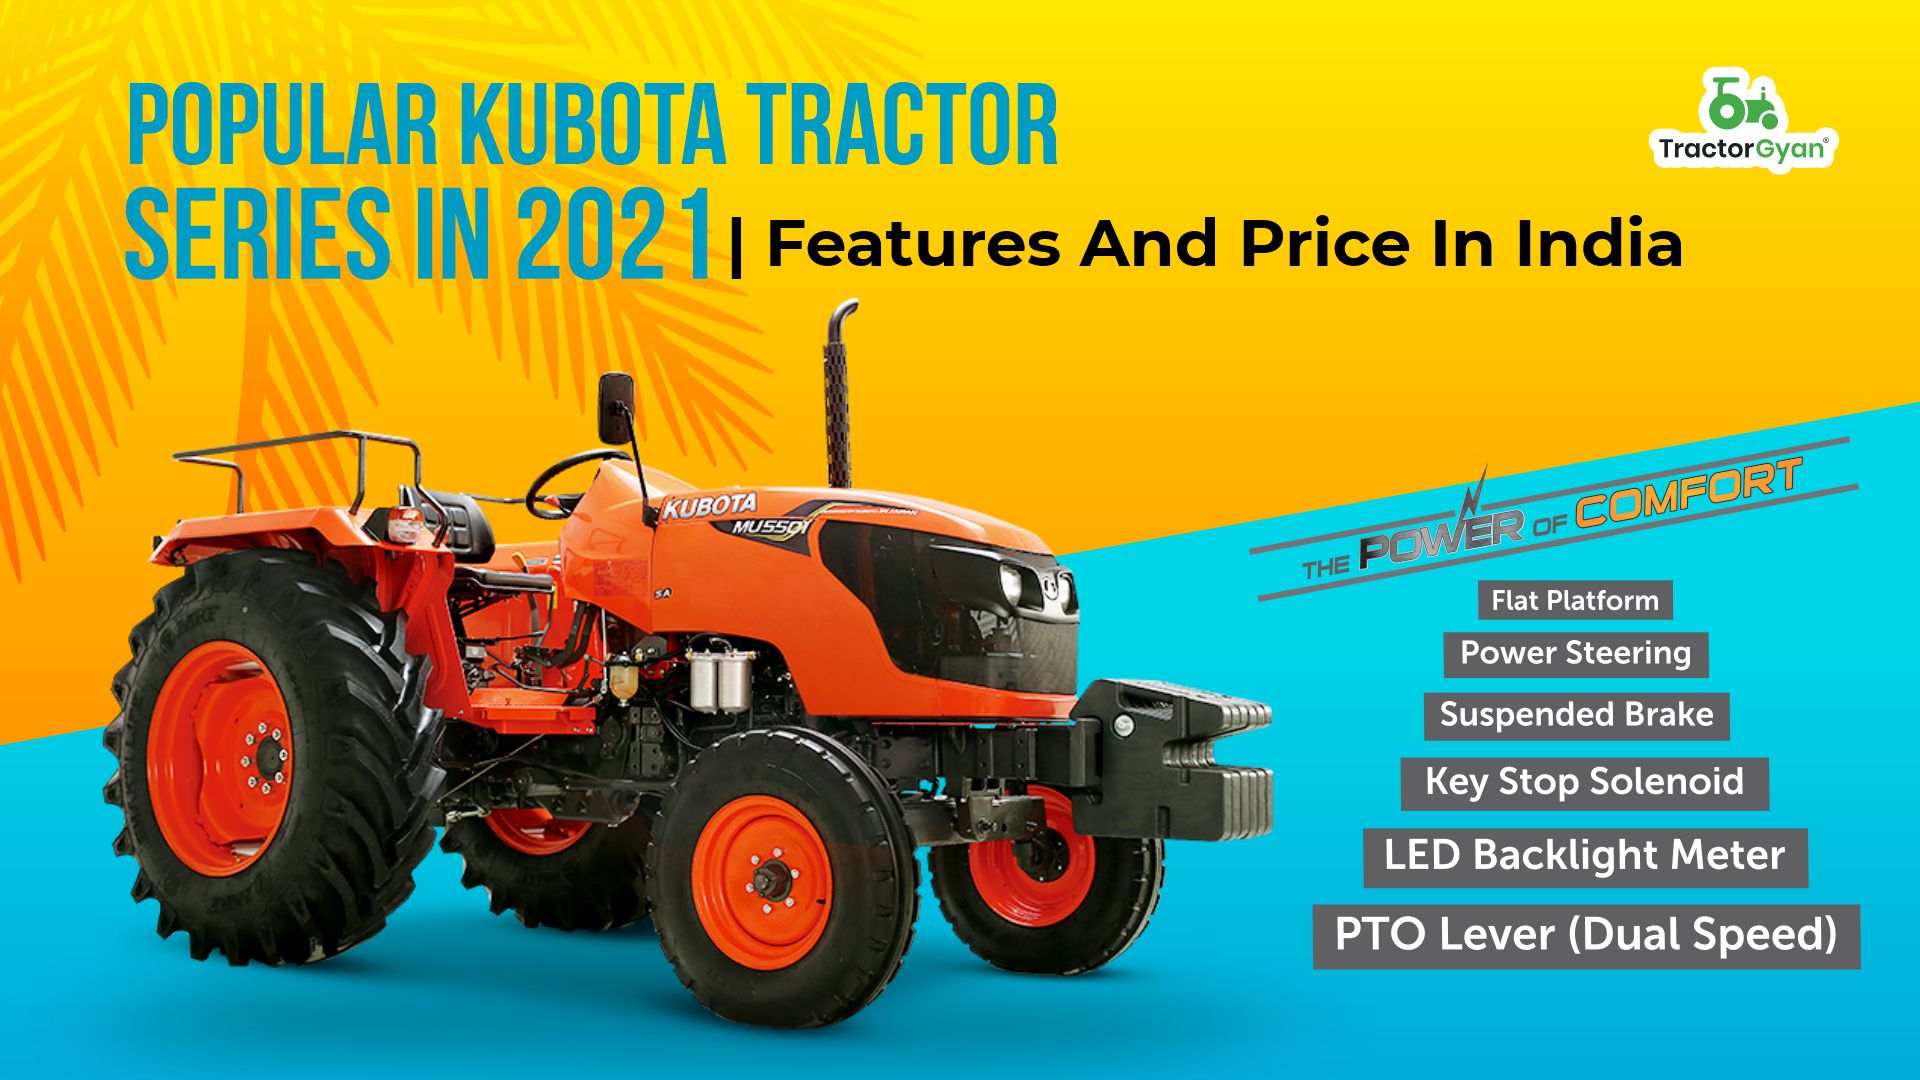 Kubota Tractor Pics Wallpapers